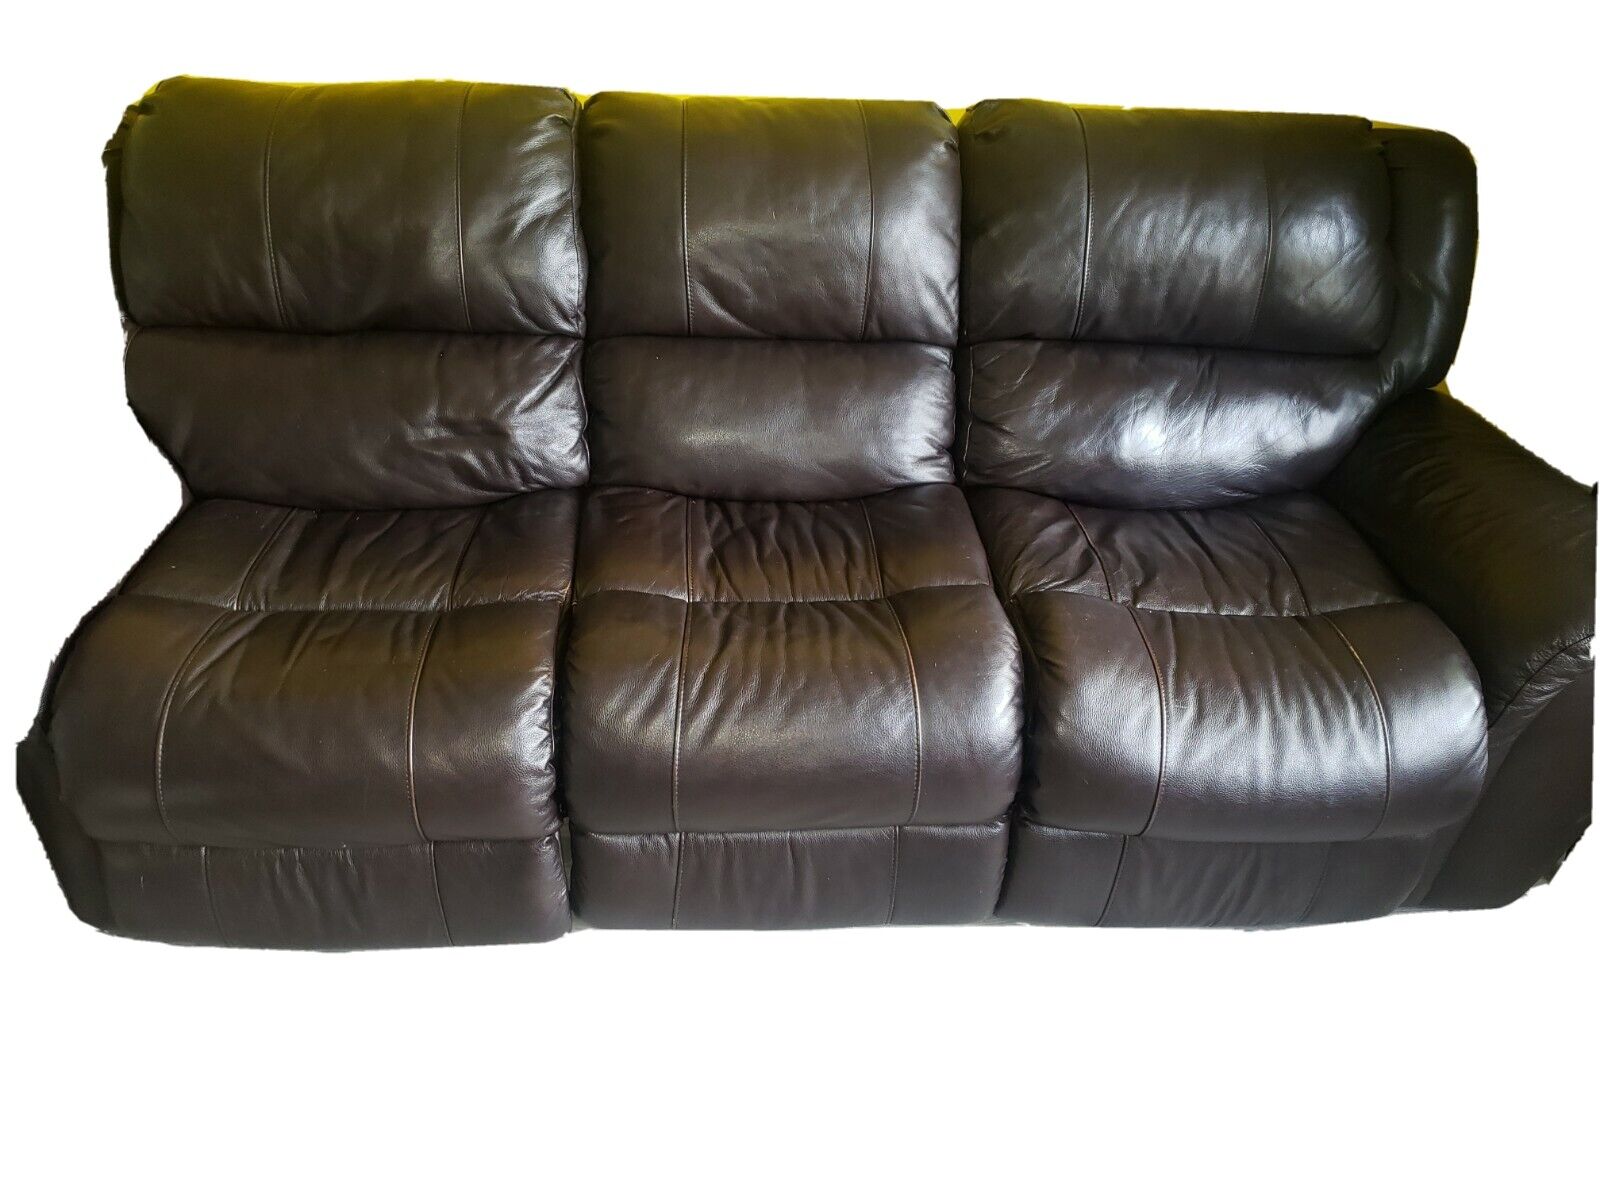 Divano Roma Furniture Classic Loveseat, Roma Leather Recliner Sofa Reviews